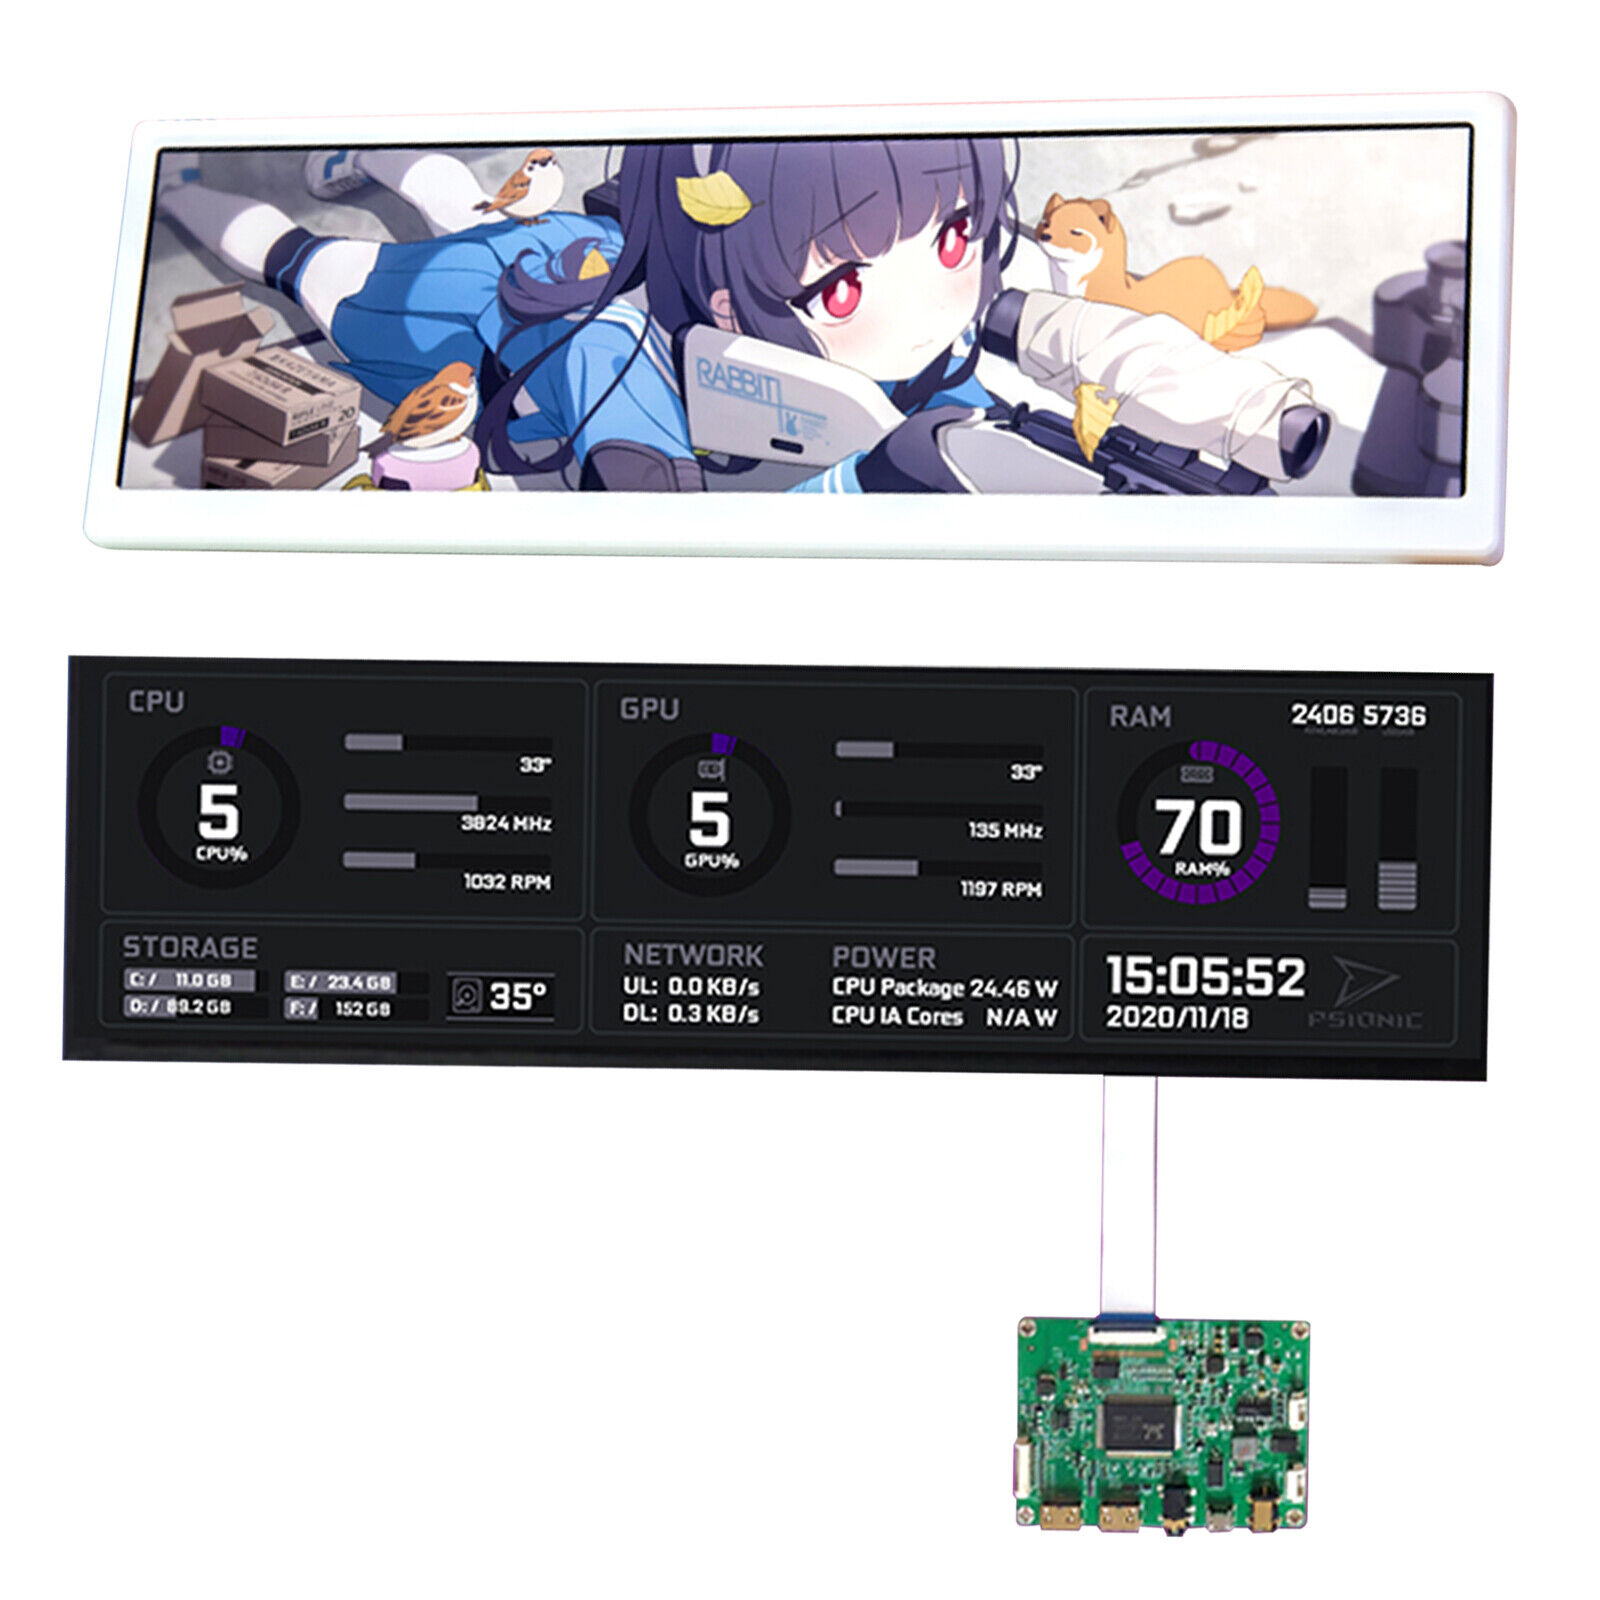 12.6 inch LCD 1x For Computer Screen PC Case DIY Hyte Y60 Aida64 CPU GPU Monitor